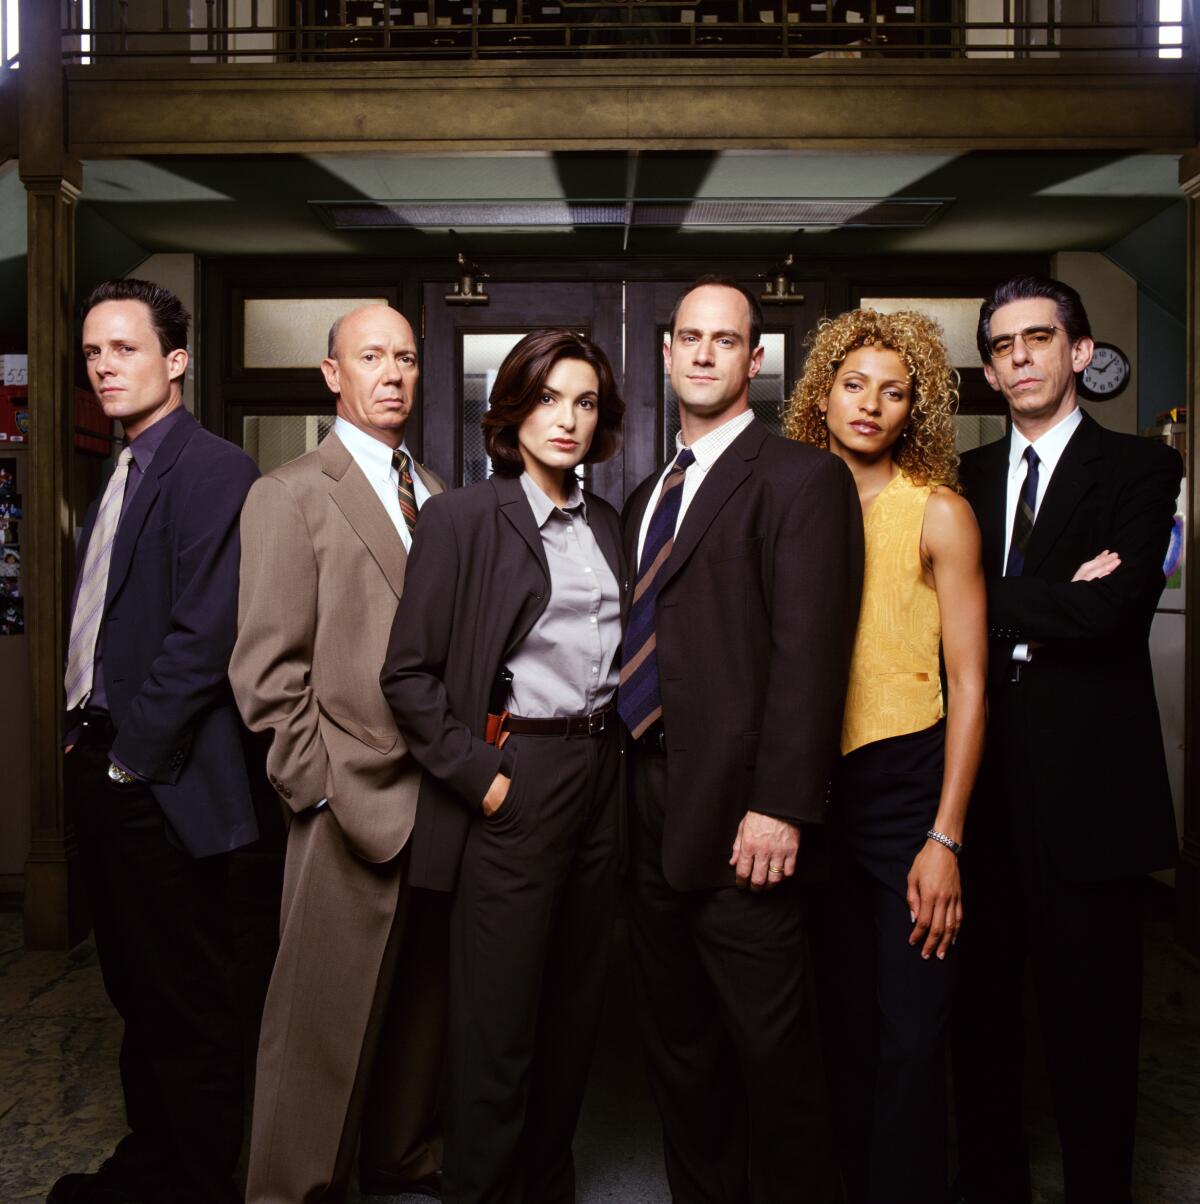 The original cast of "Law & Order: SVU"